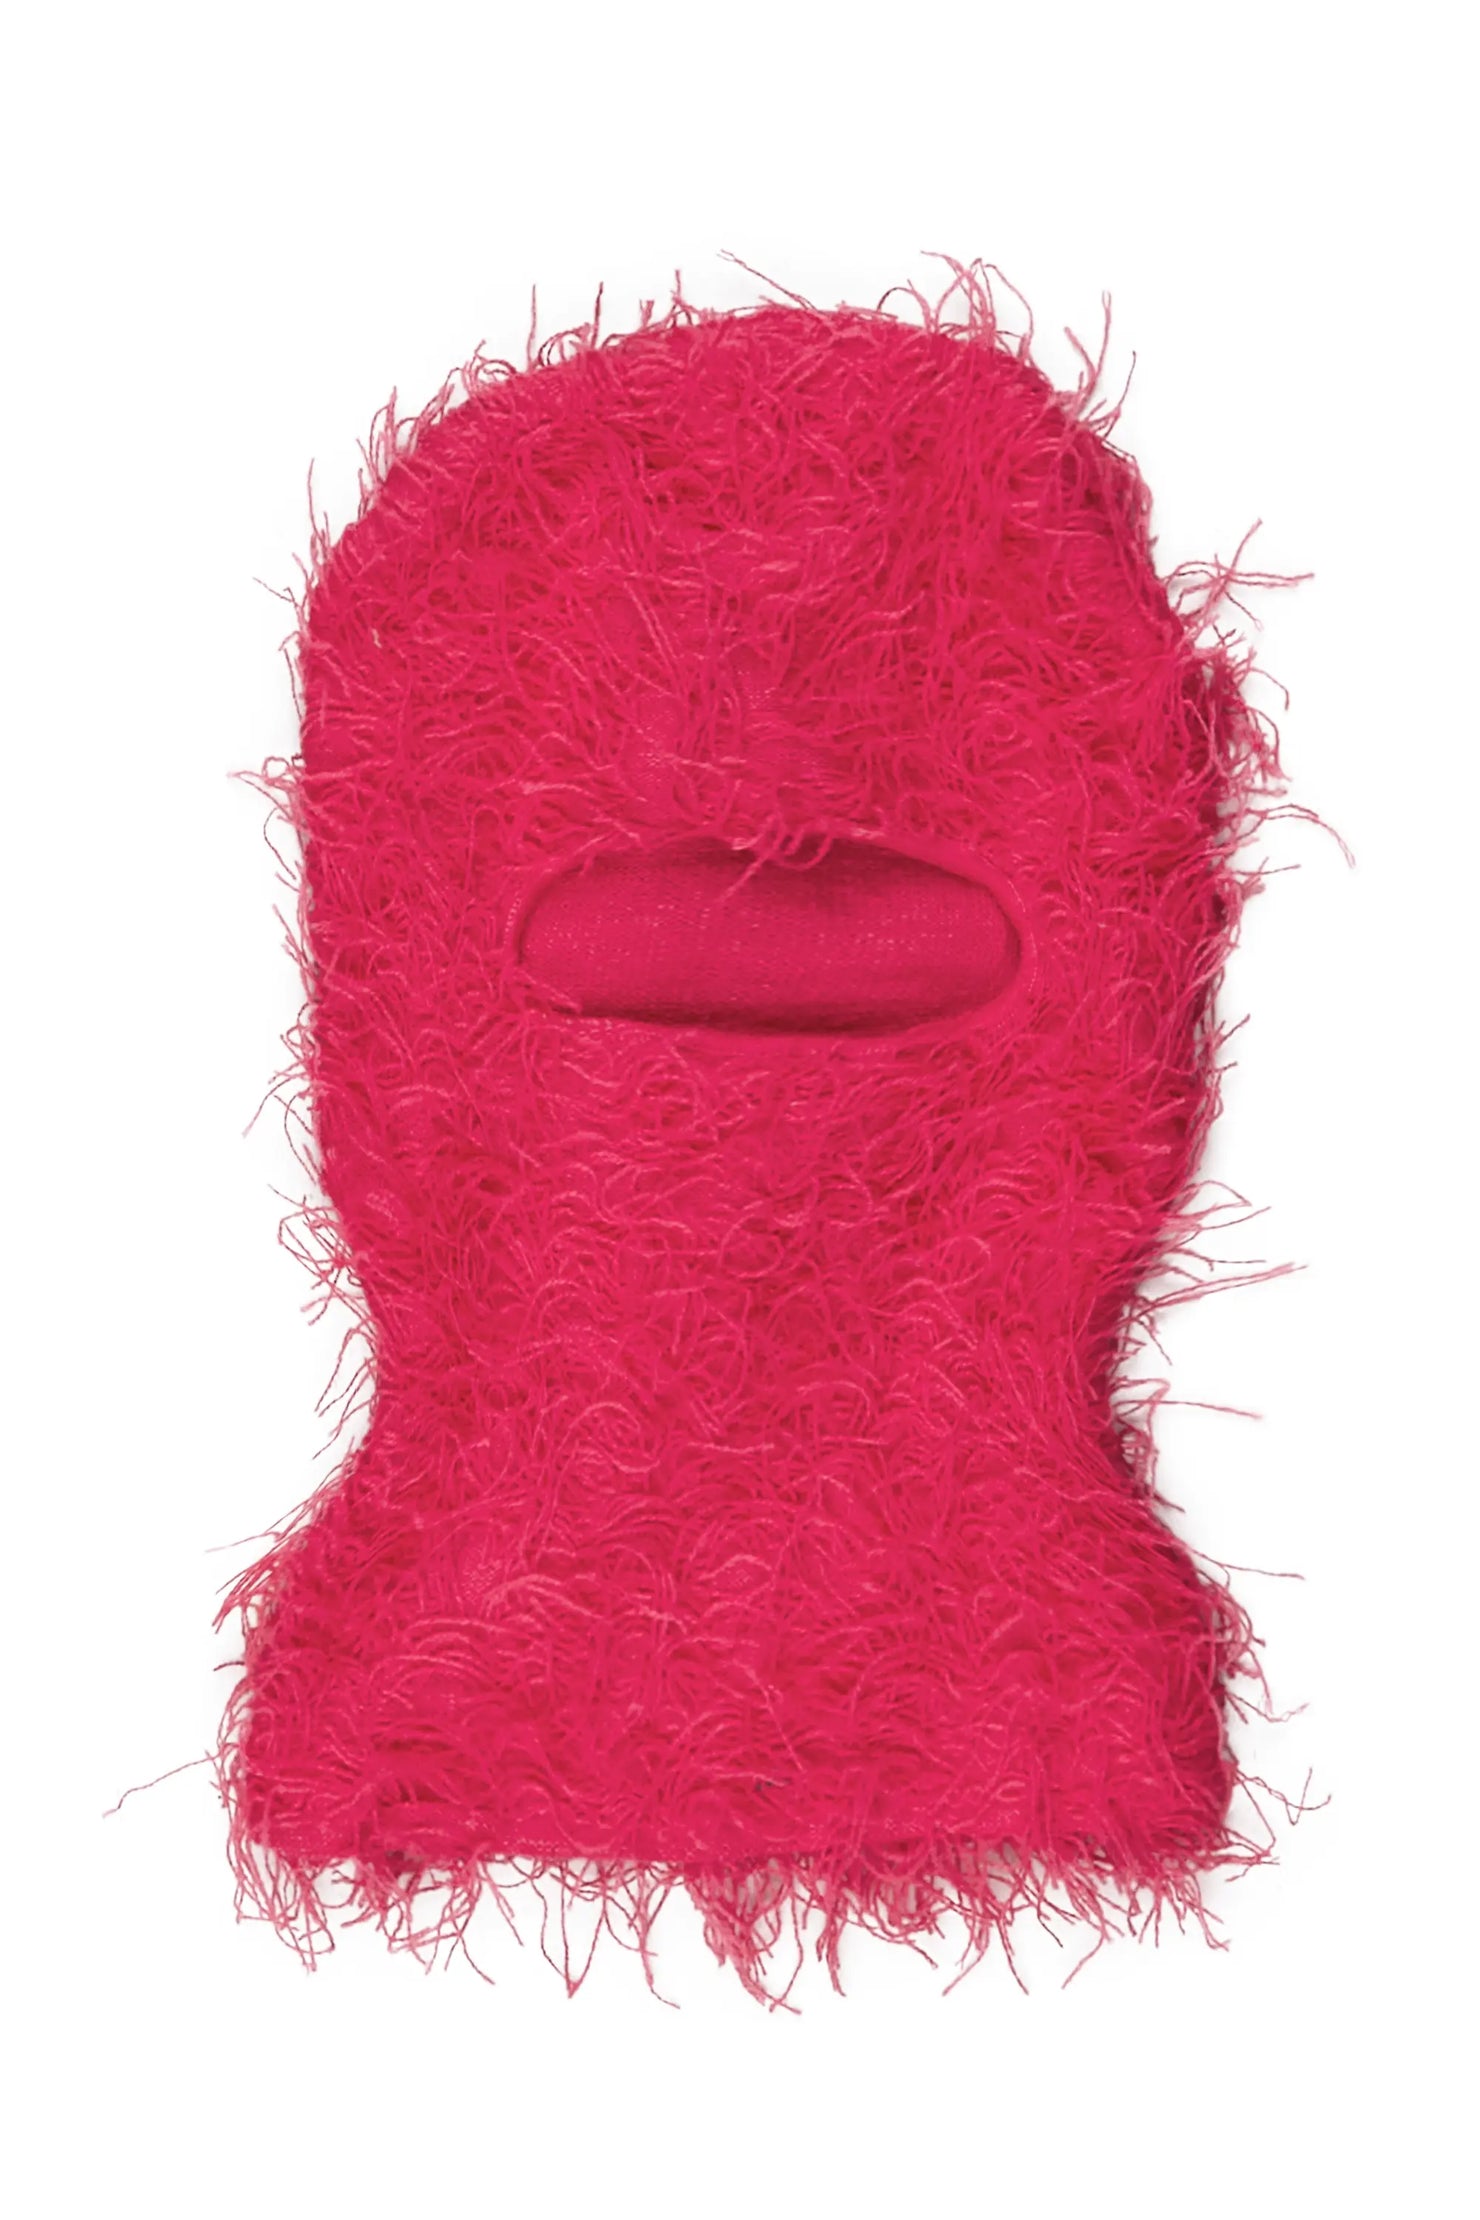 Seantee Hot Pink Fuzzy Ski Mask